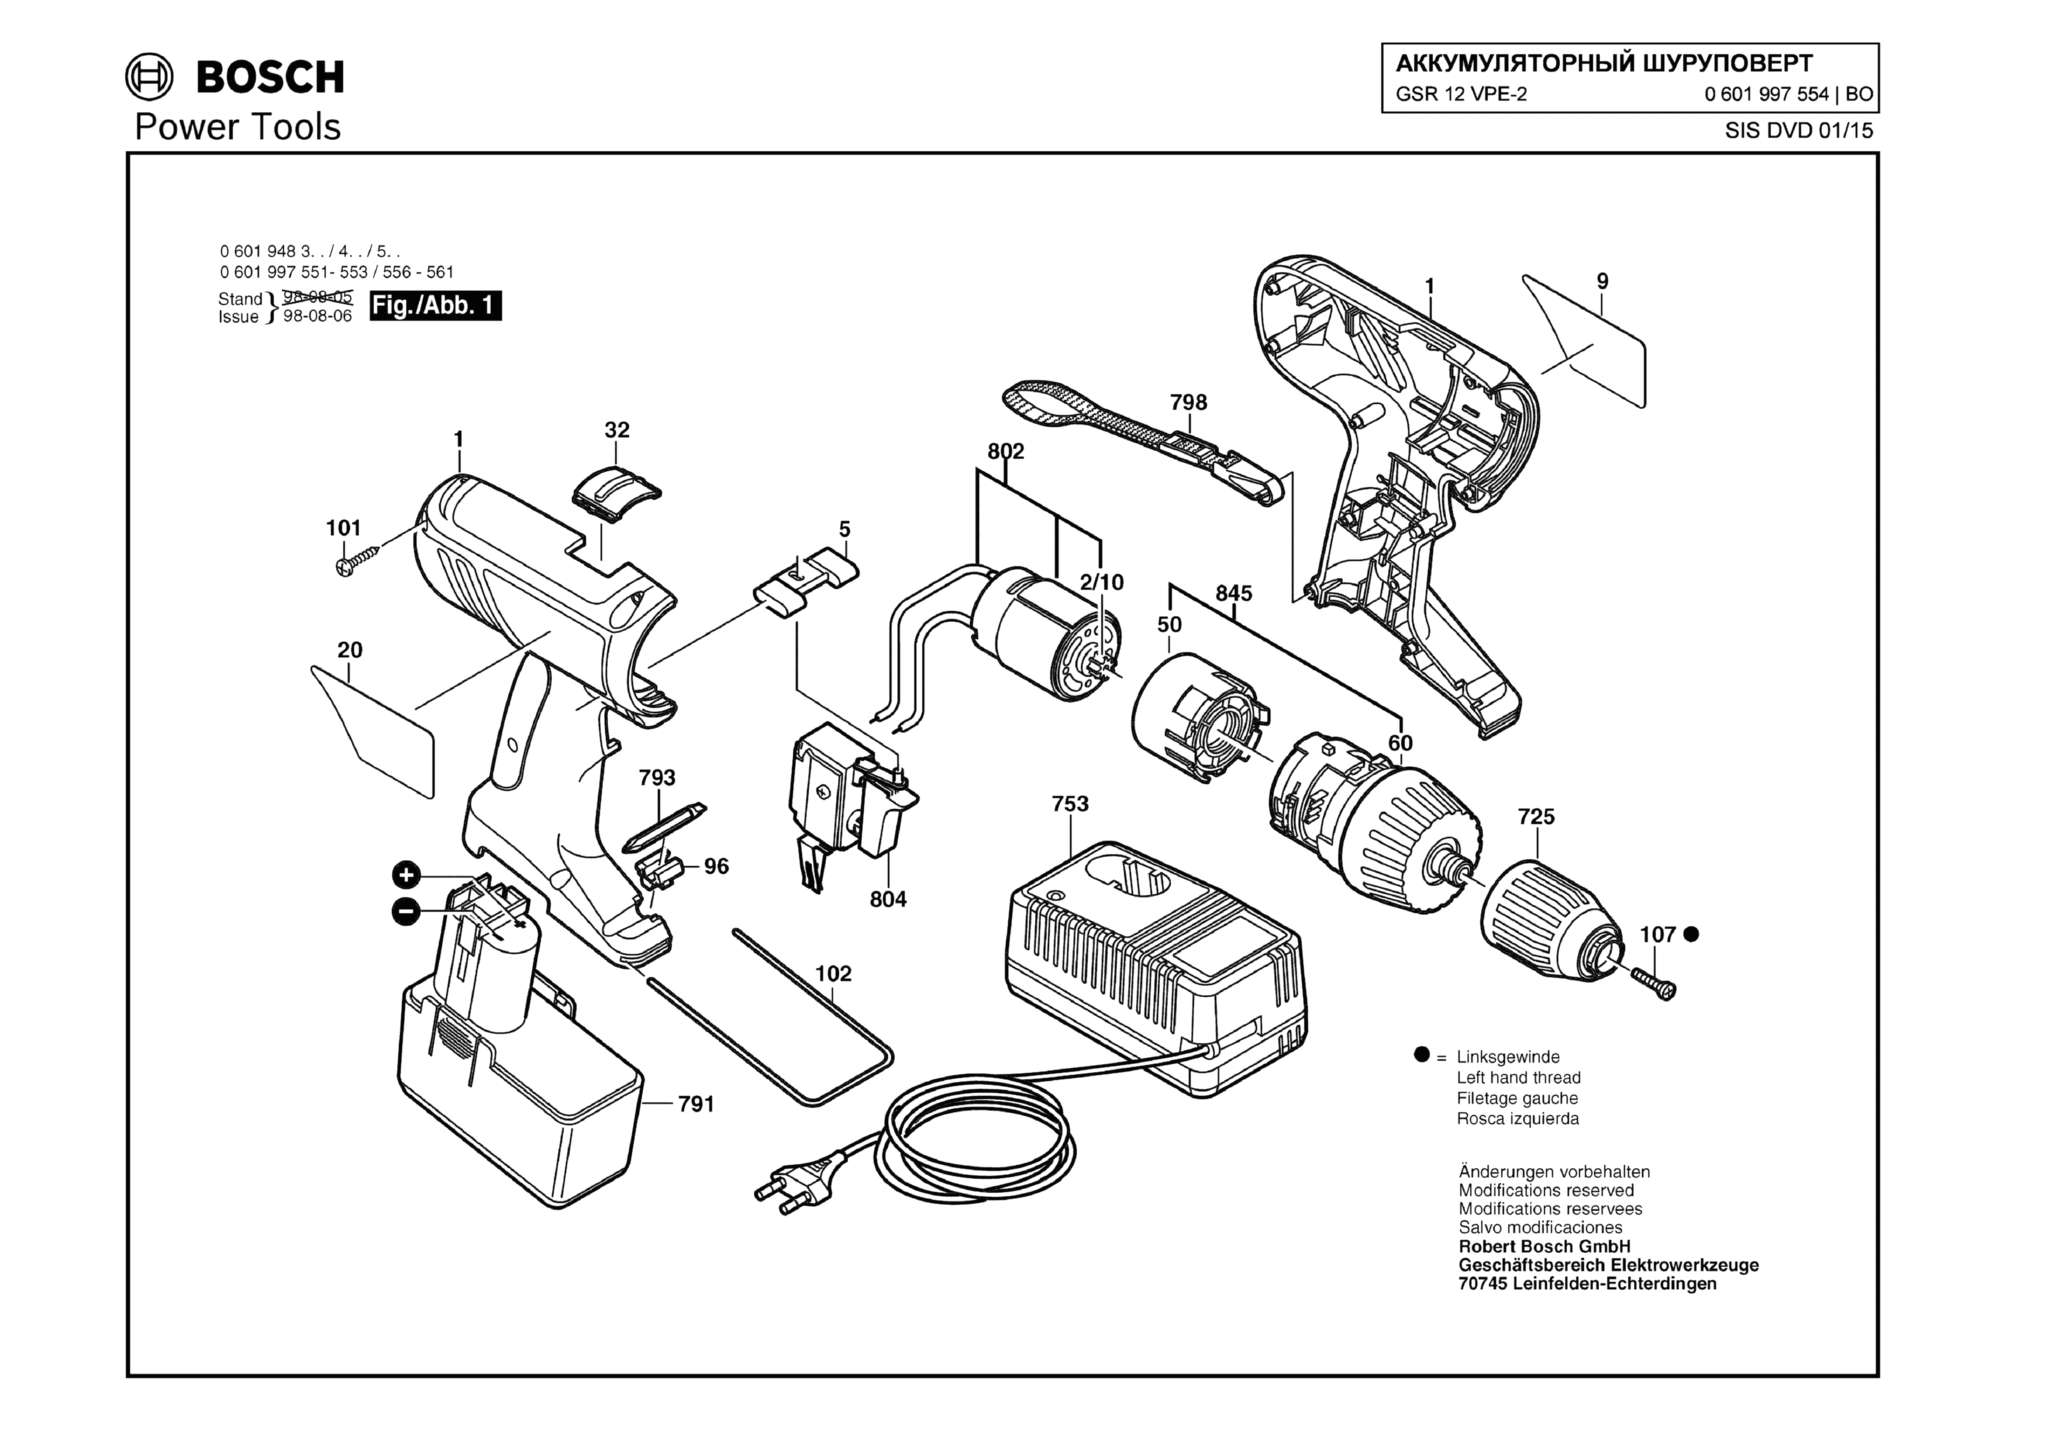 Запчасти, схема и деталировка Bosch GSR 12 VPE-2 (ТИП 0601997554)